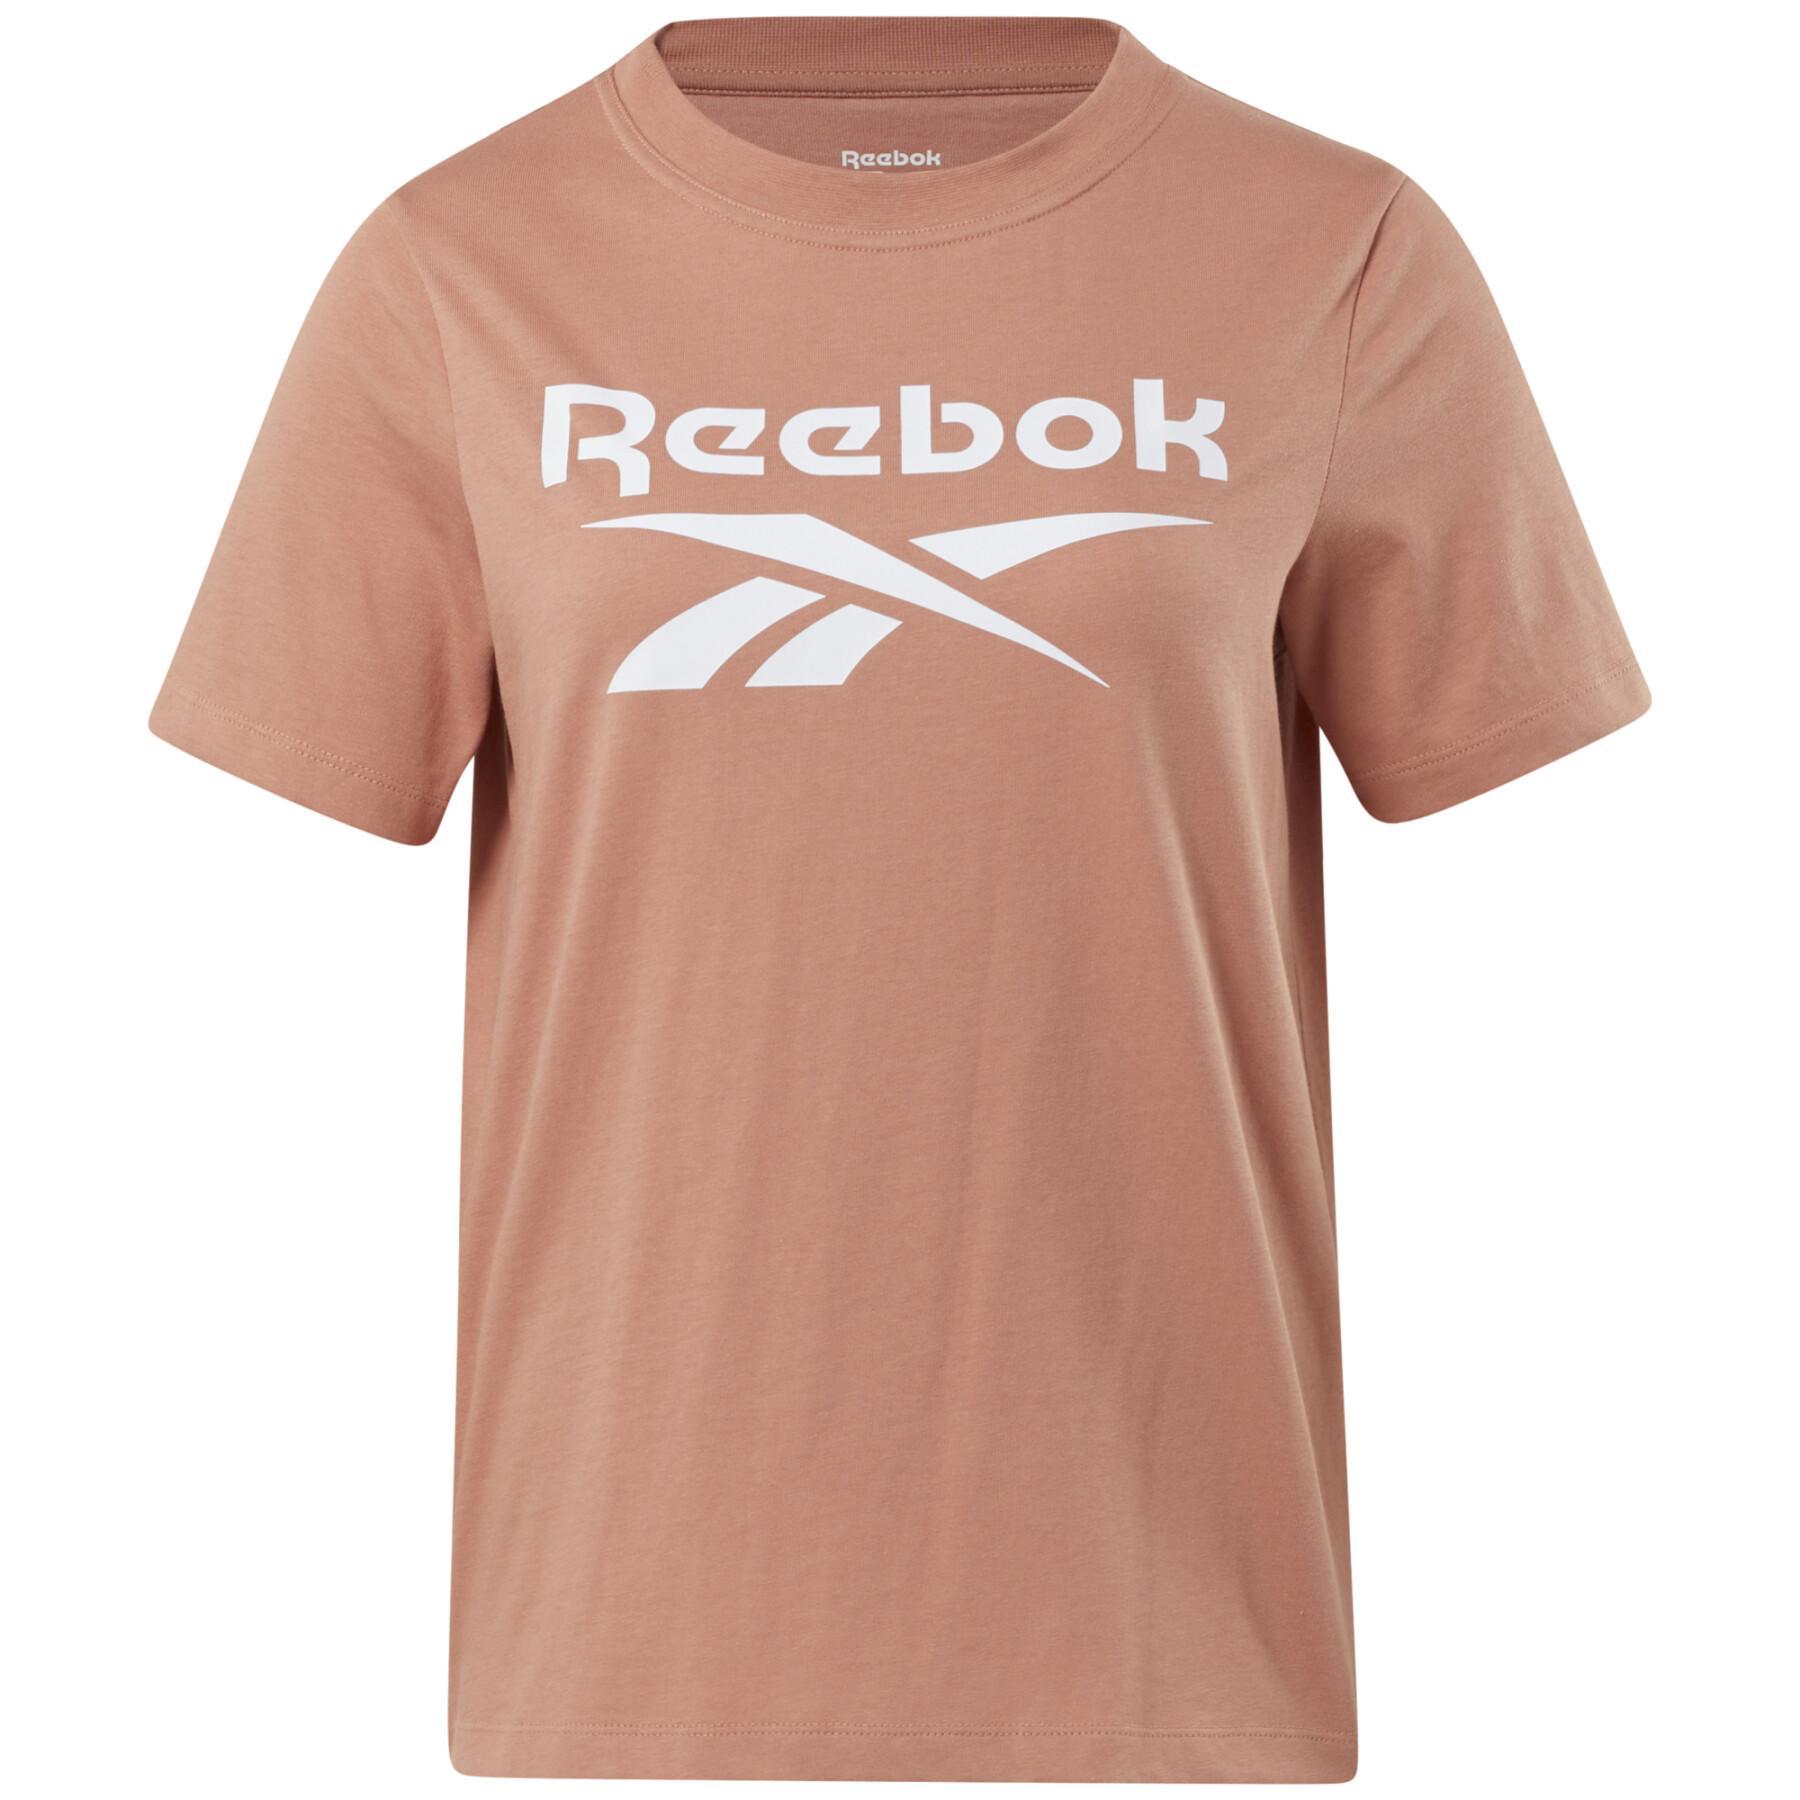 Camiseta de mujer Reebok Identity Big Logo